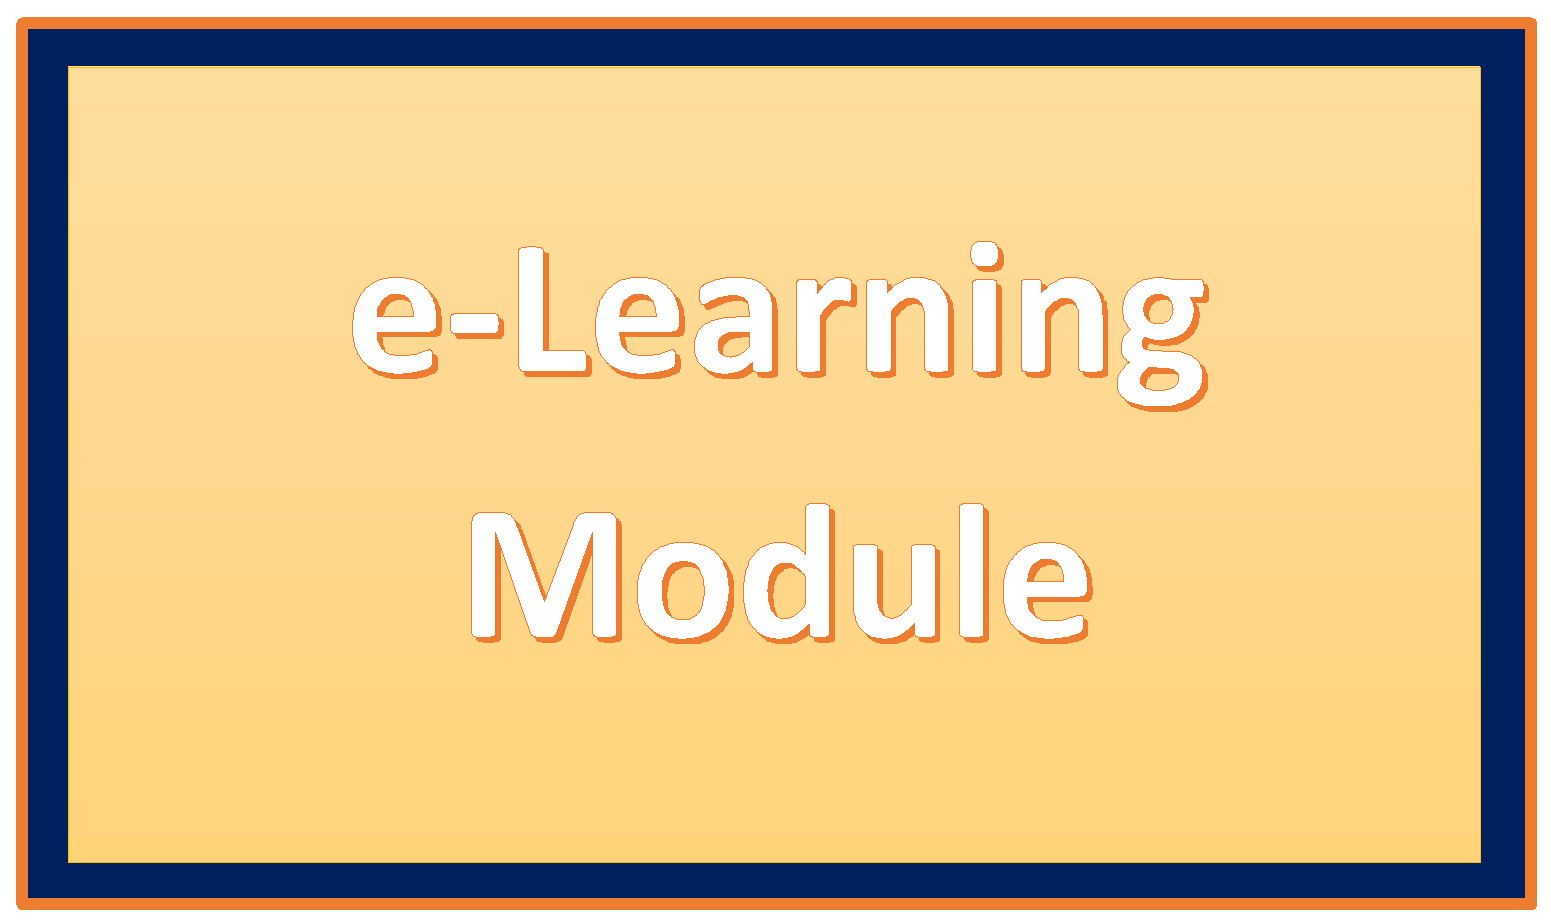 http://study.aisectonline.com/images/CCE Course Module .png